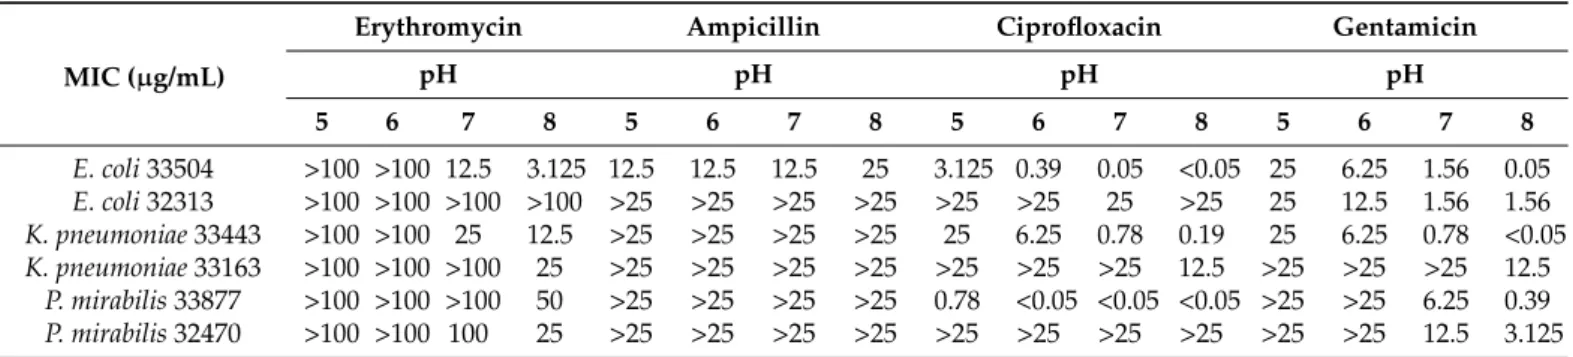 Table 3. Minimal inhibitory concentrations for erythromycin, ampicillin, ciprofloxacin and gentamicin on E